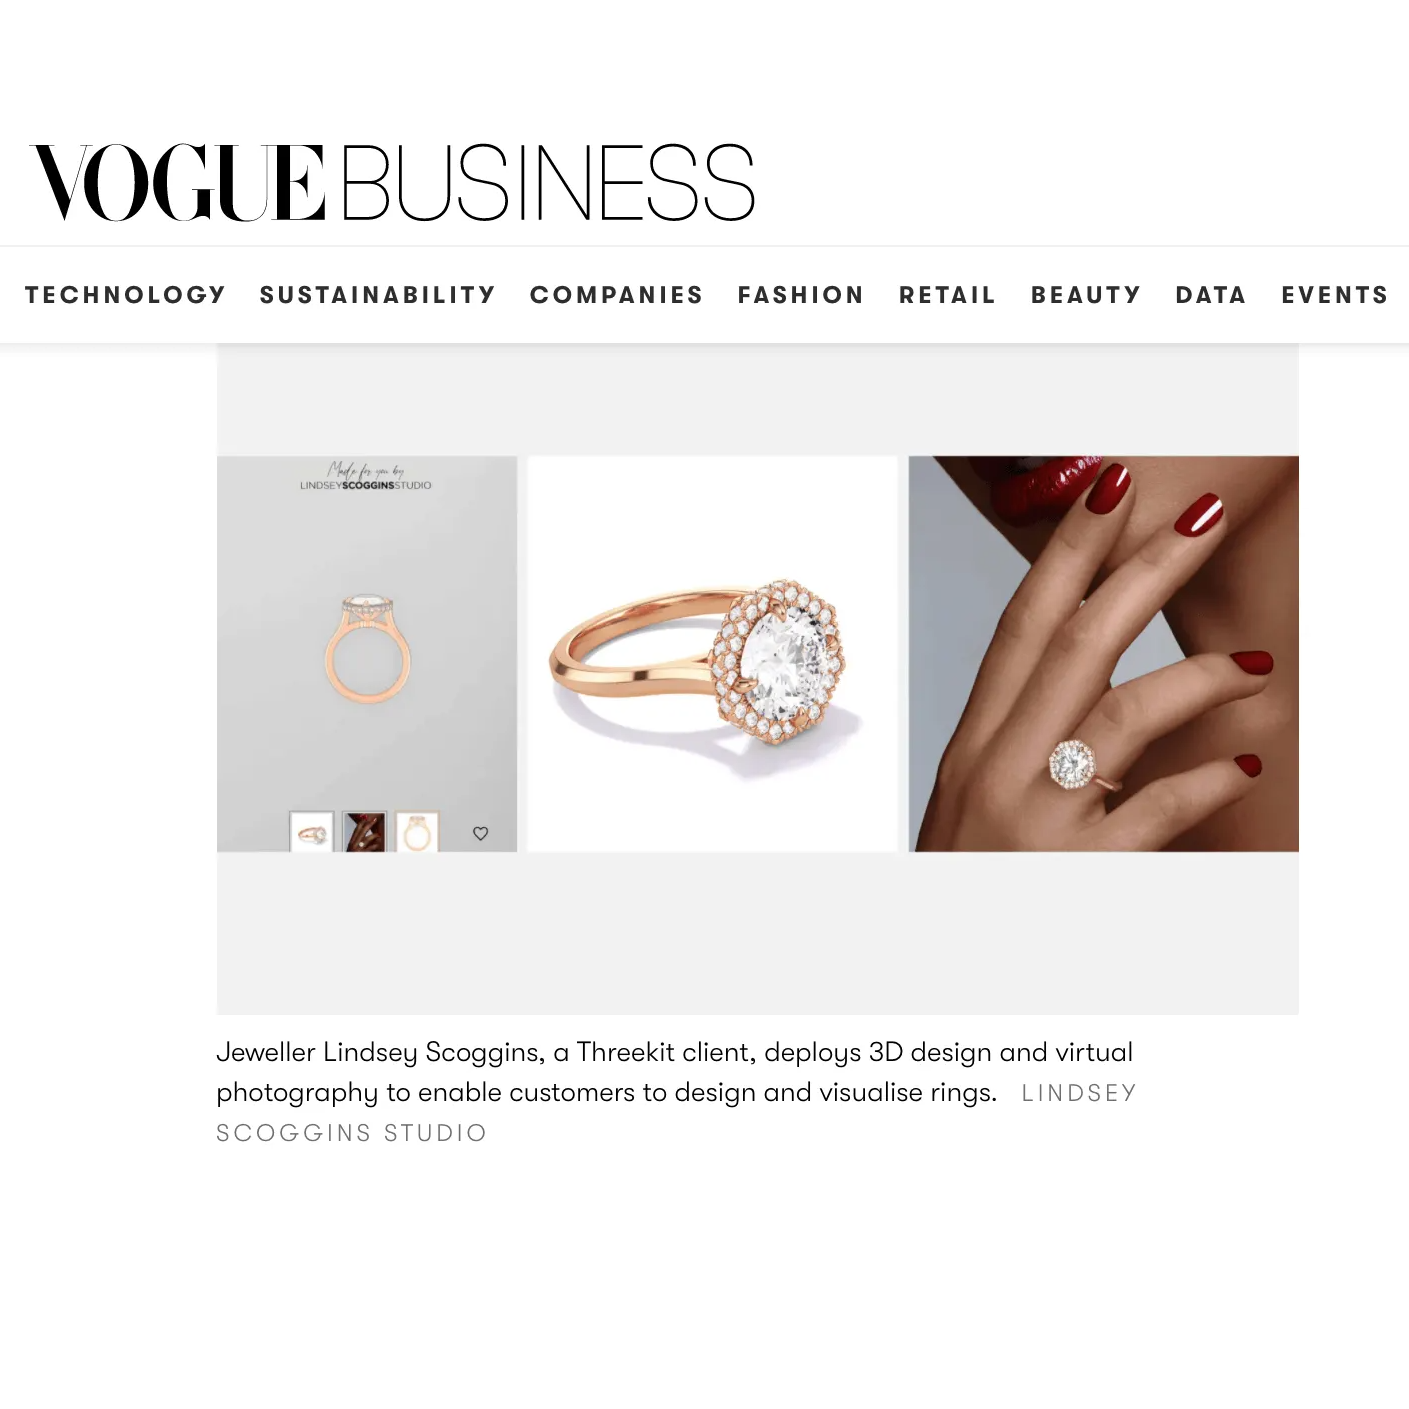 Vogue Business x Lindsey Scoggins Studio